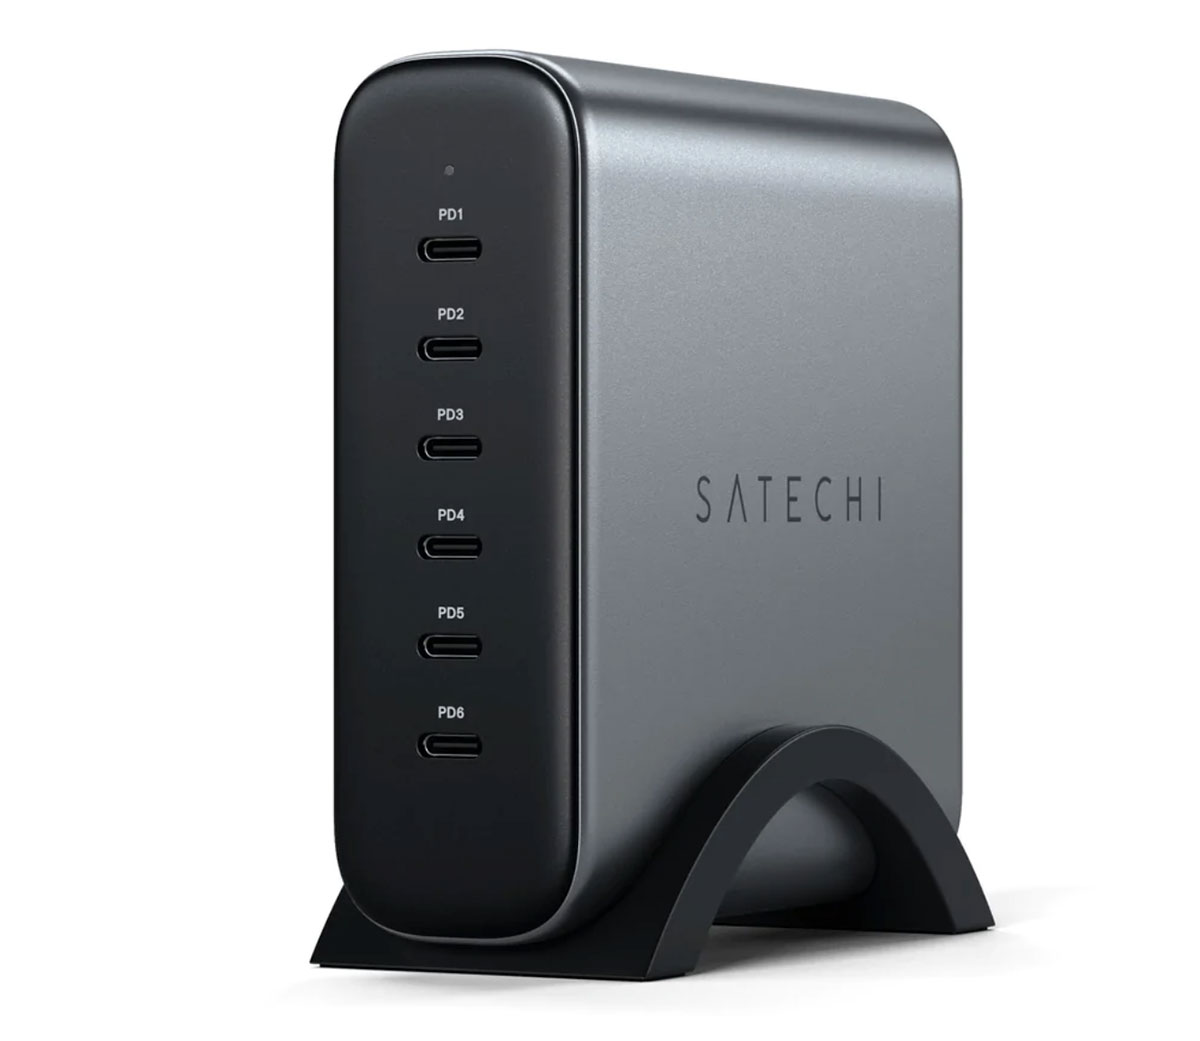 Satechi 200W USB-C 6-port PD GaN Charger – Best USB-C Desktop Charger for 16-inch MacBook Pro